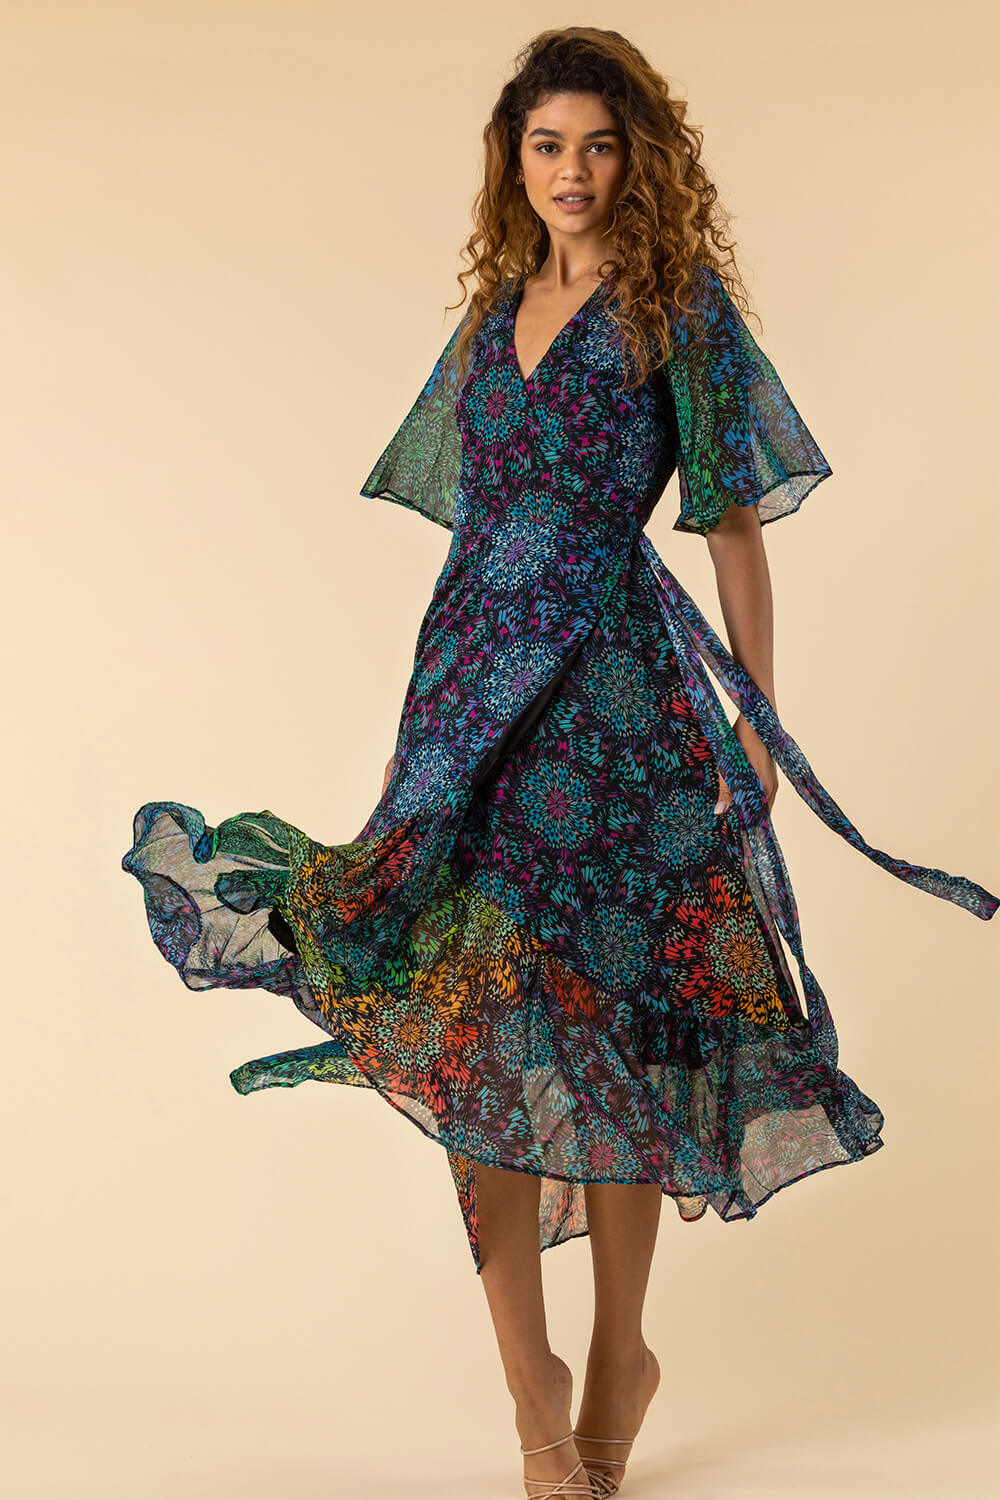 Roman Women's Abstract Print Maxi Wrap Dress|Size: 10